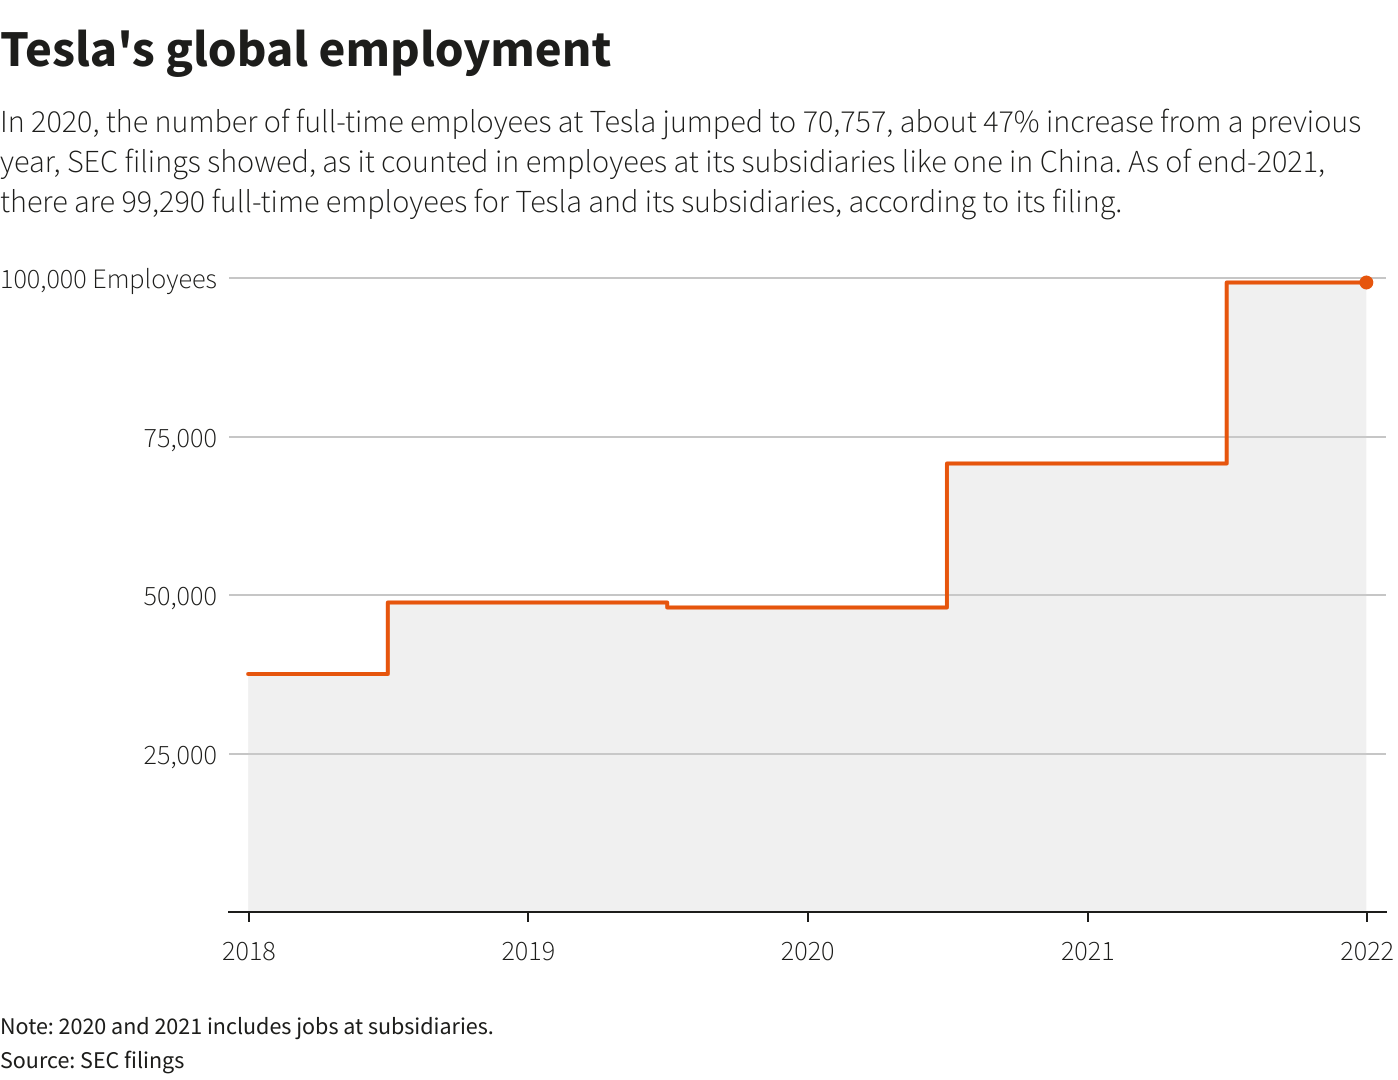 GRAPHIC-Tesla’s global employment